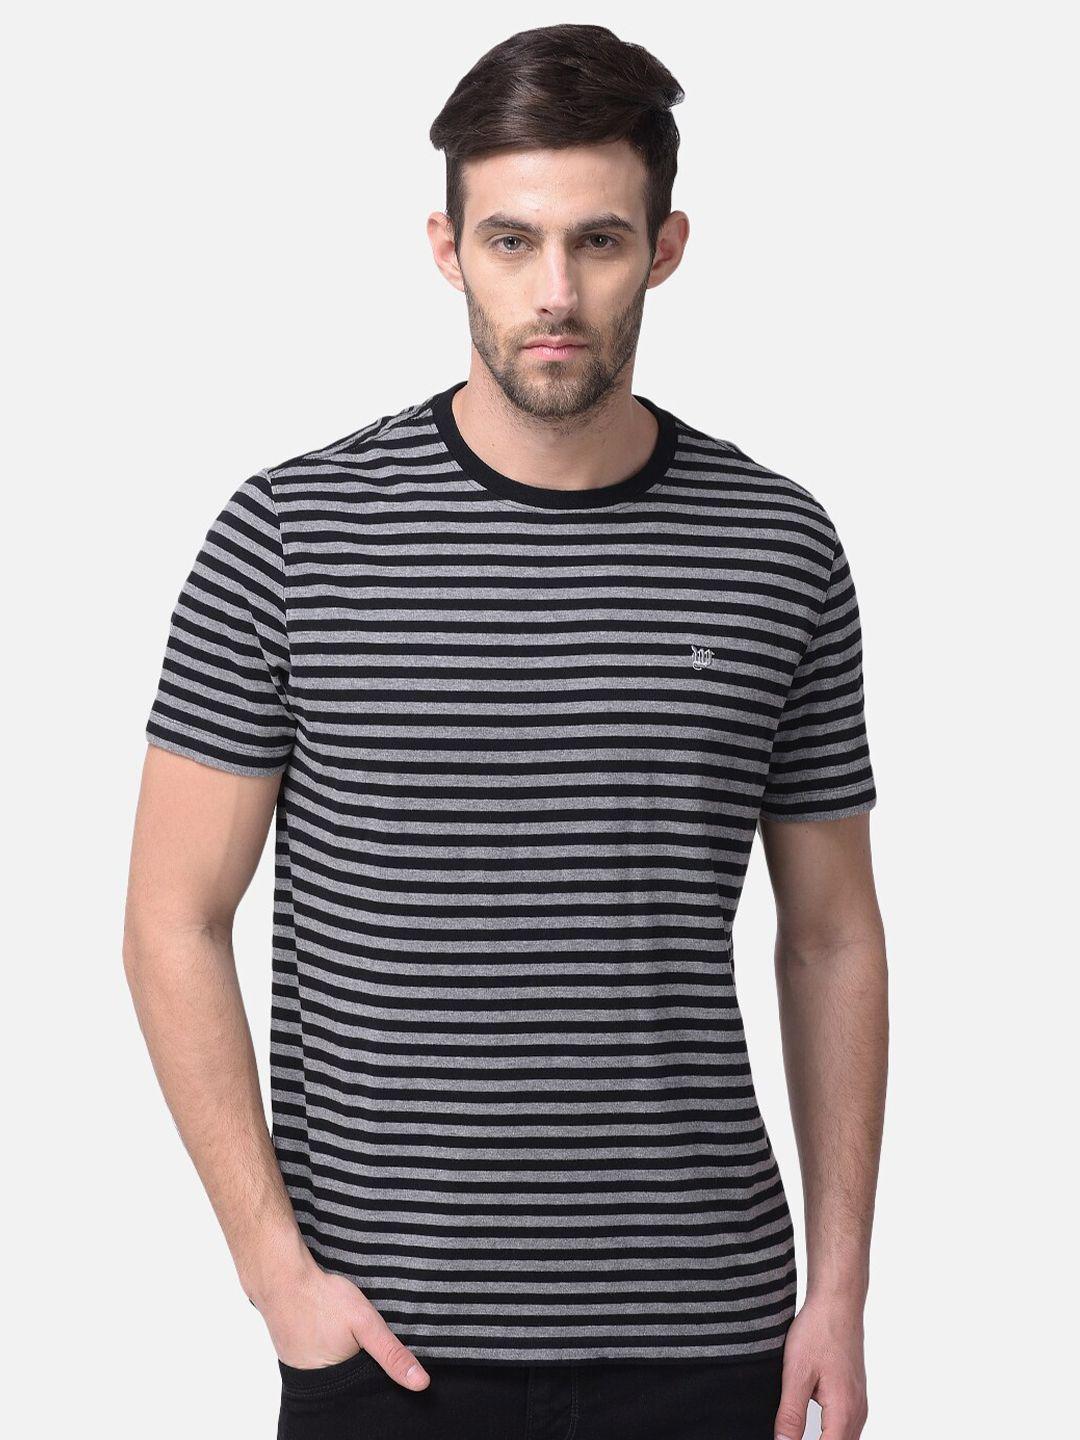 woods men grey & black striped pure cotton t-shirt